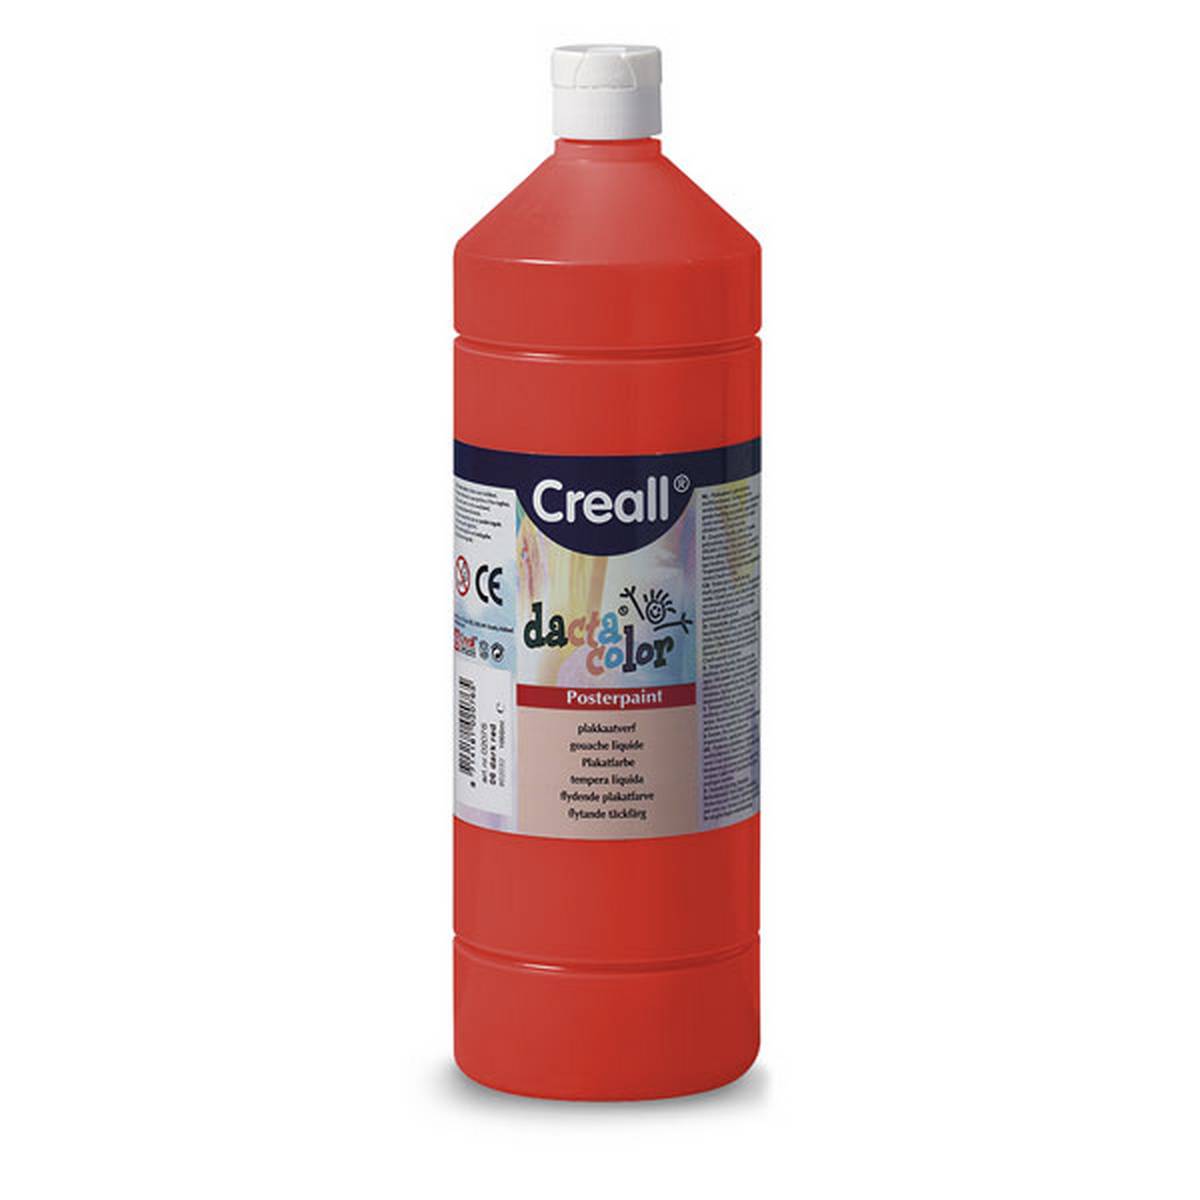 Creall 1 litre Bottle Poster Paint - Red